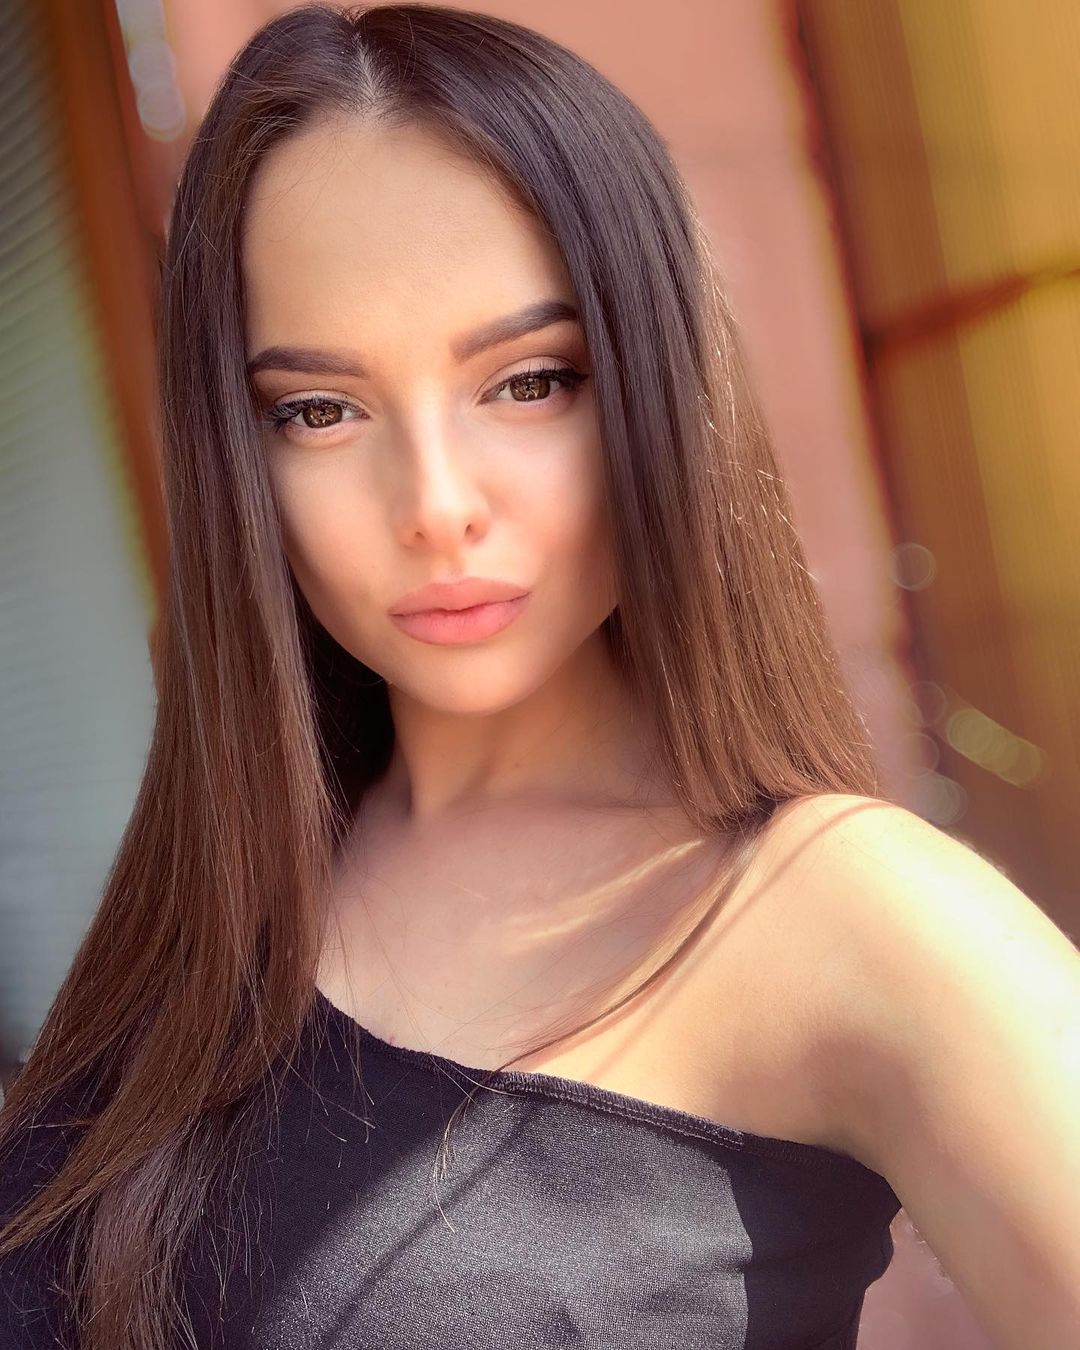 Svetlana frolova 22 hottest pics, svetlana frolova 22 instagram